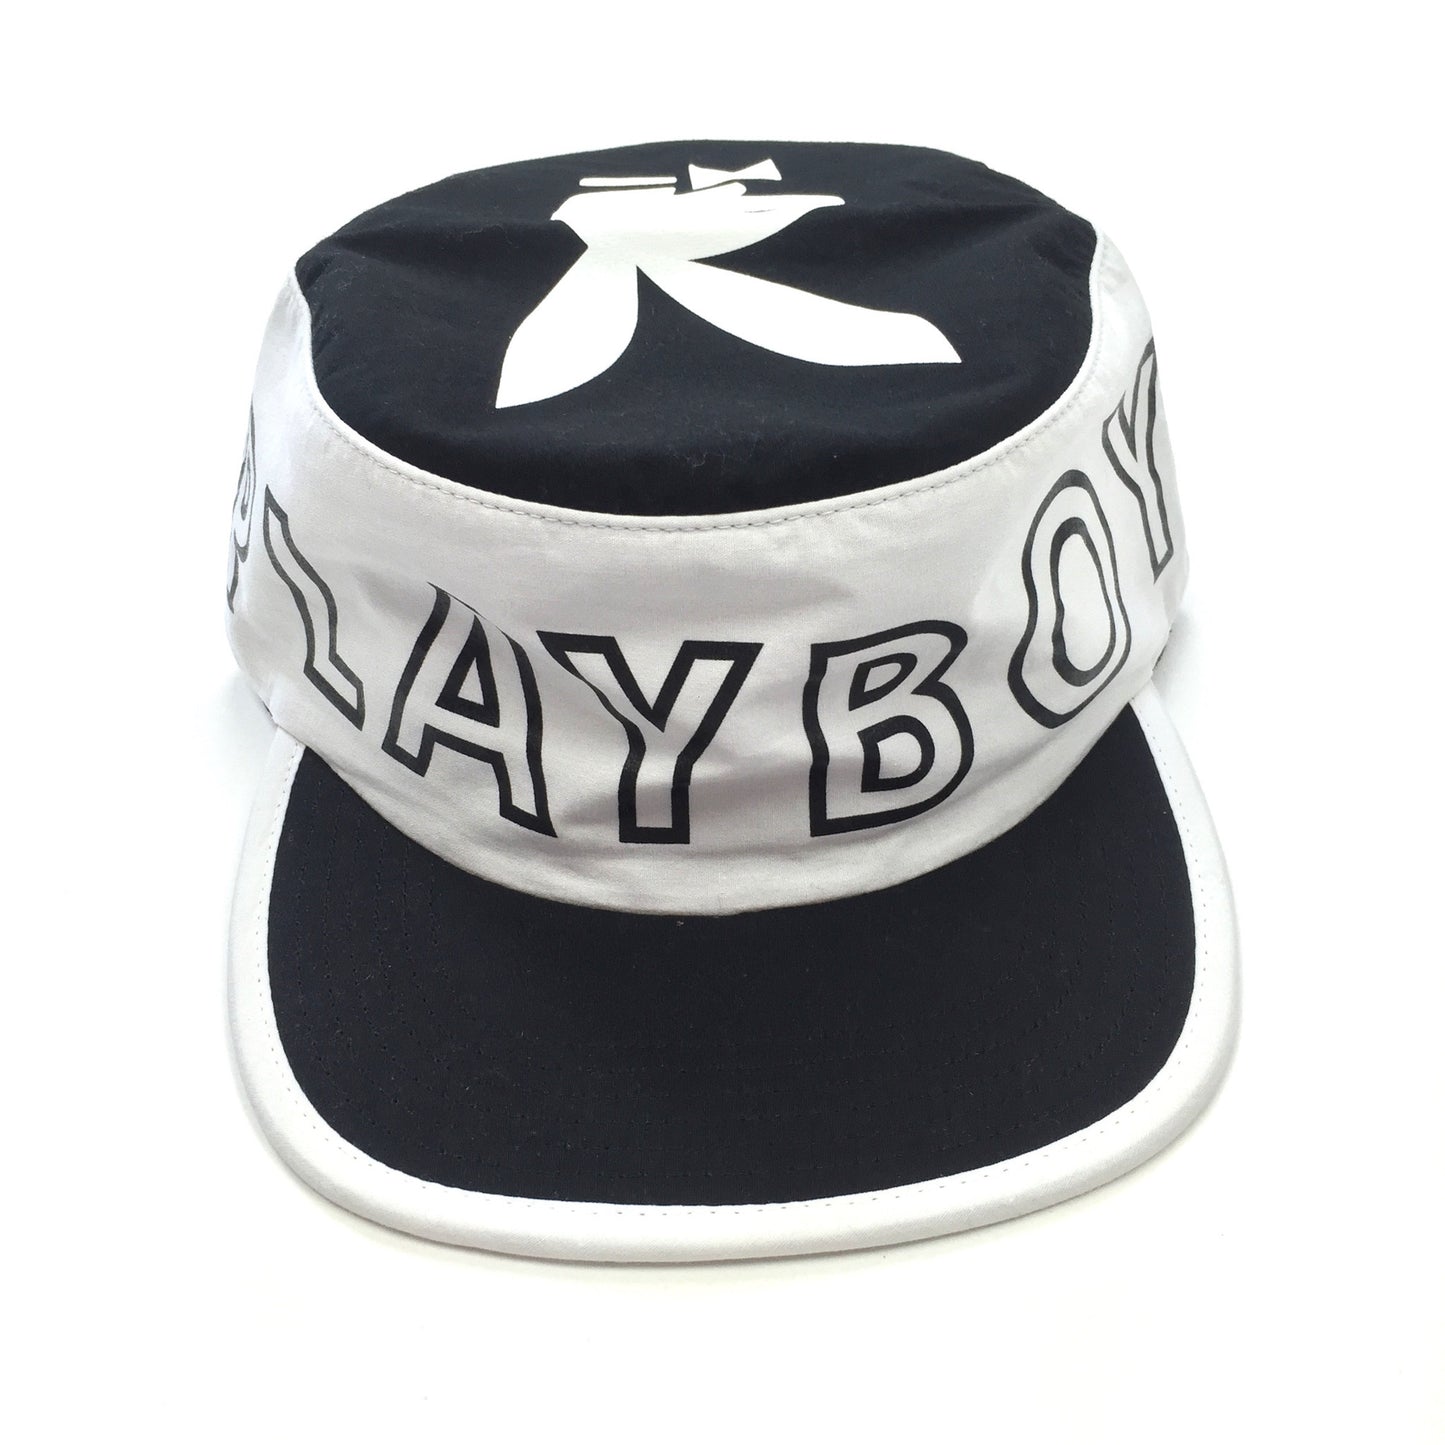 Supreme x Playboy - Black & White Pillbox Hat